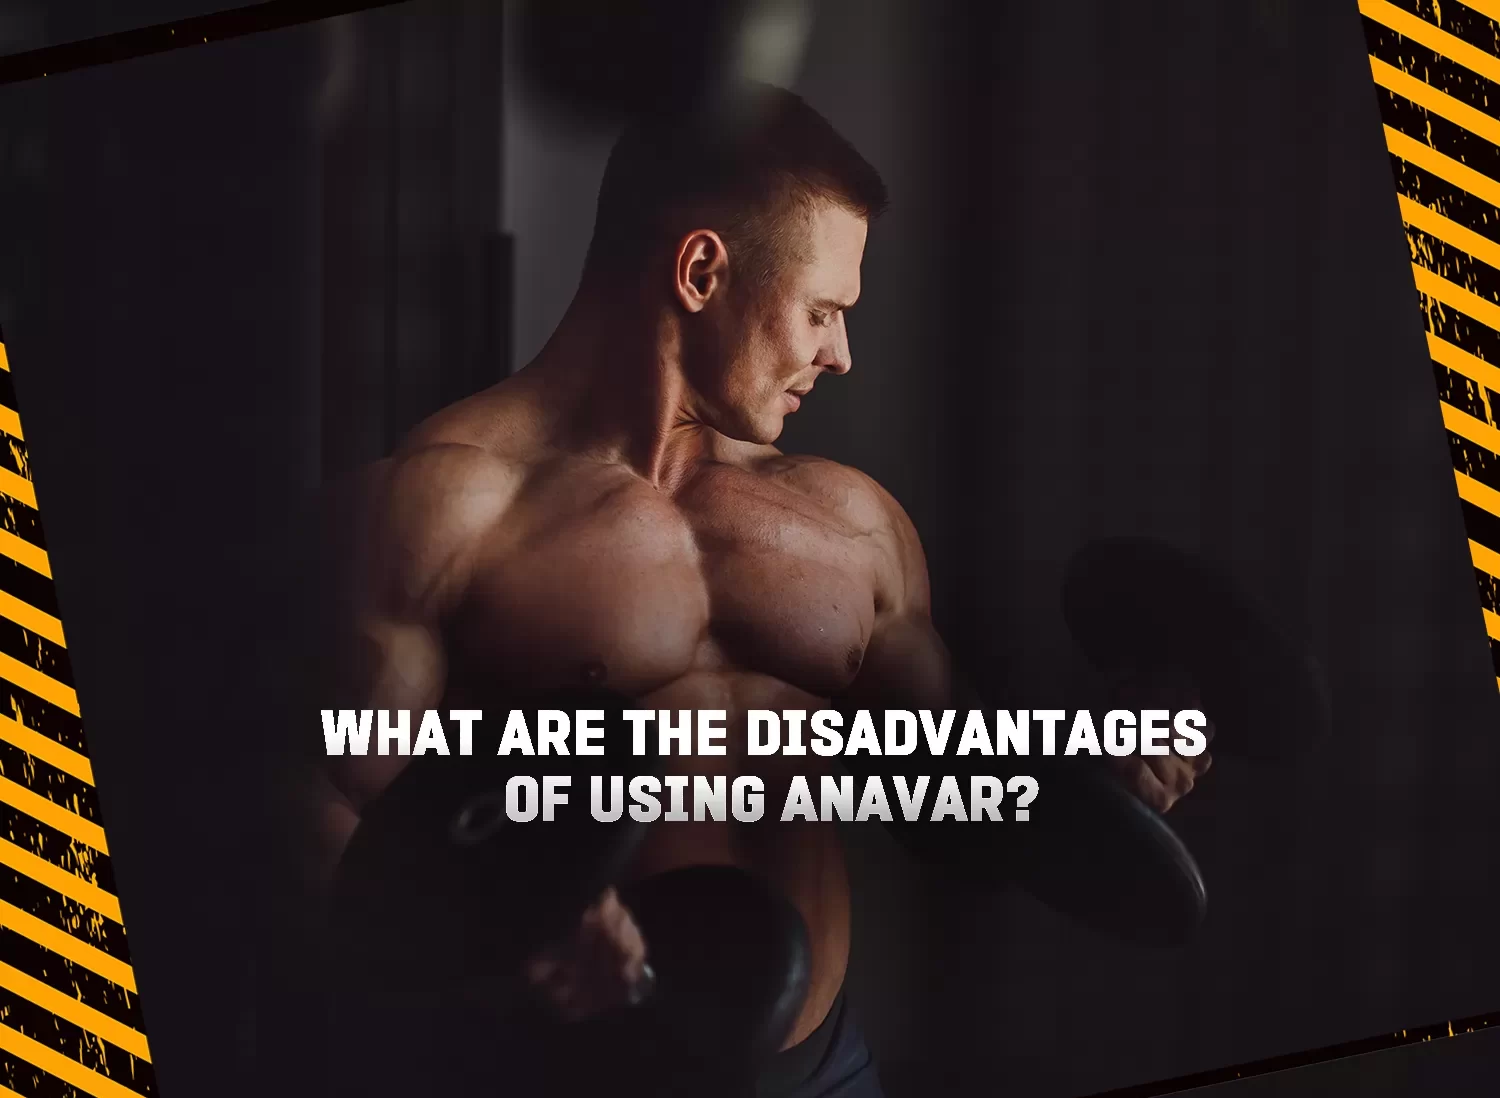 Disadvantages of using Anavar